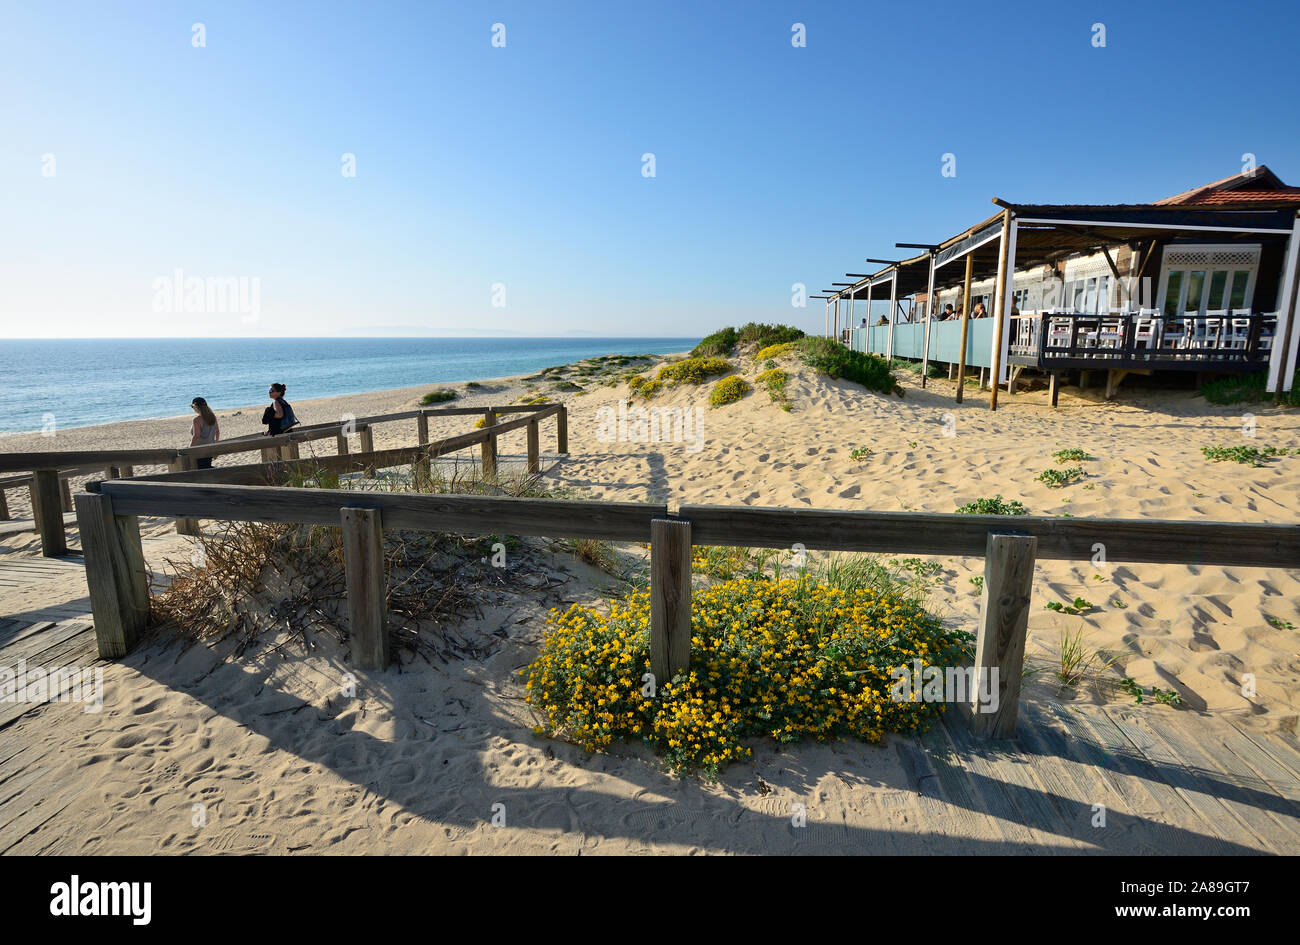 Restaurant at Pego beach, Alentejo. Portugal Stock Photo